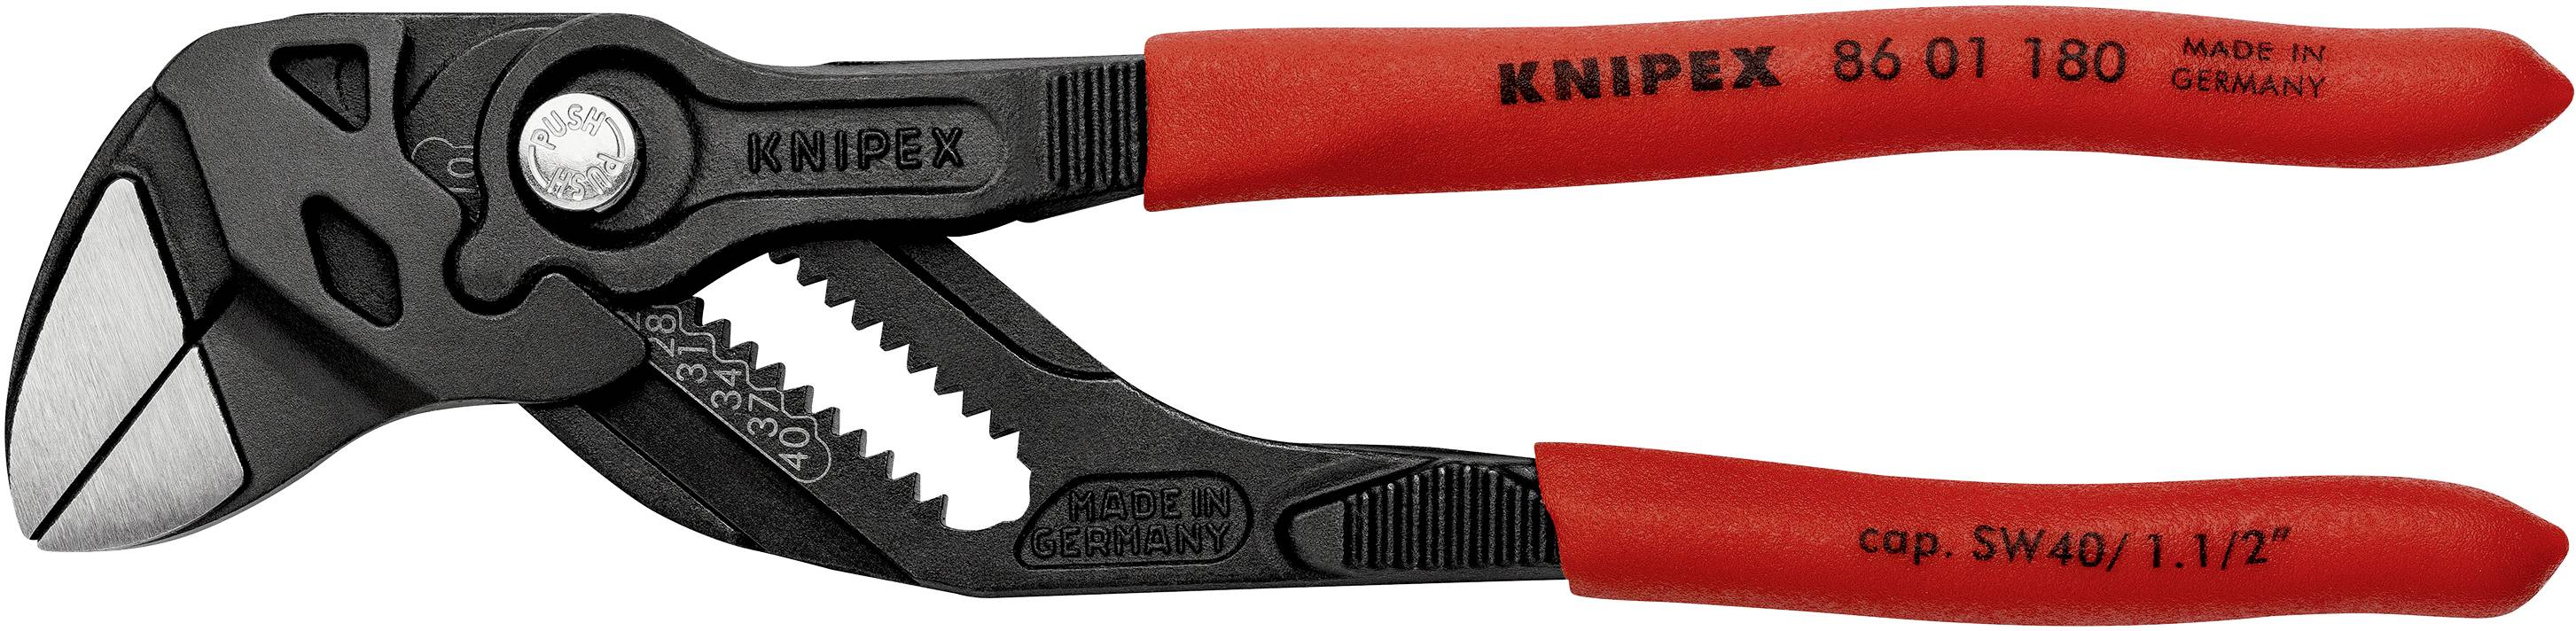 KNIPEX Zangenschlüssel 86 01 180